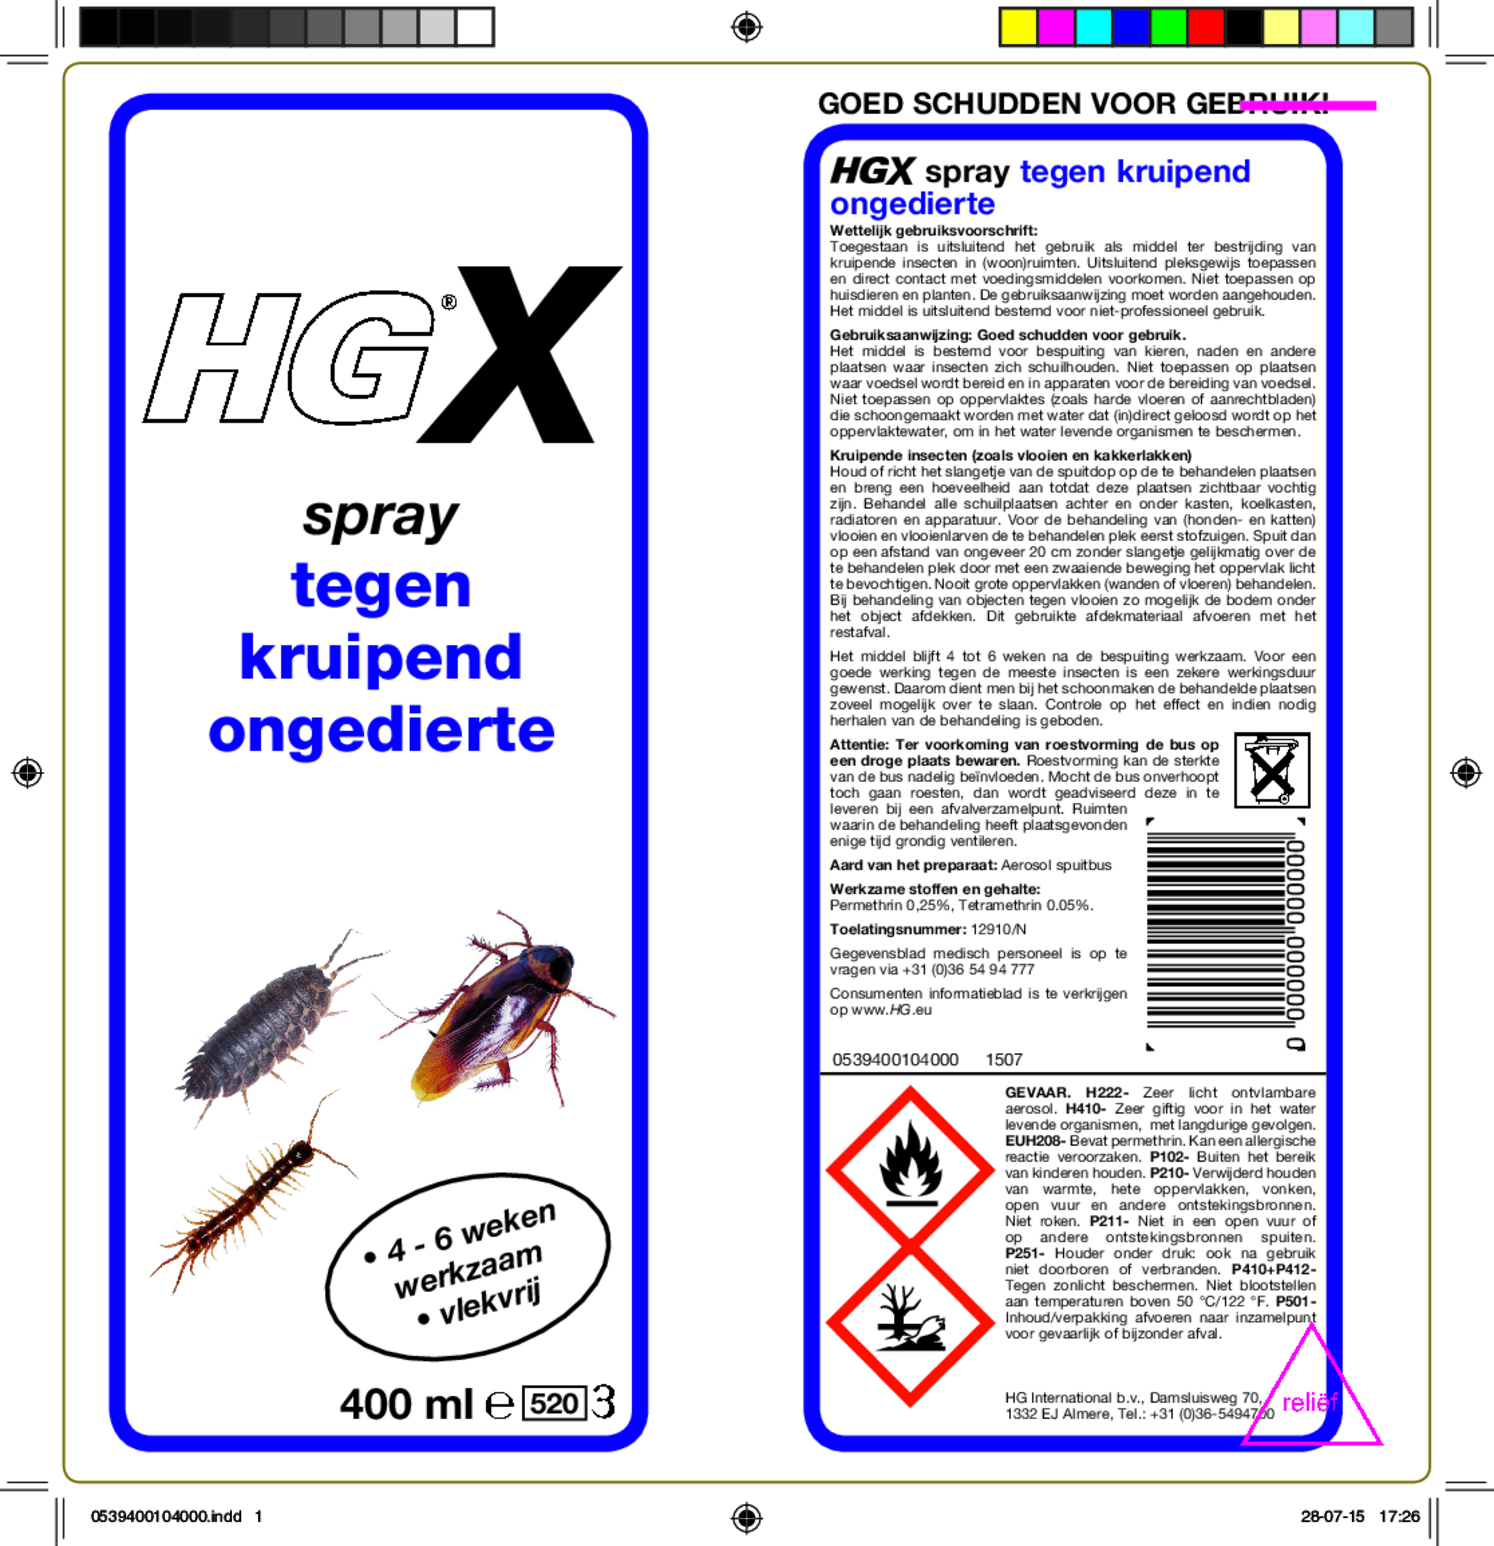 X Spray Tegen Kruipend Ongedierte afbeelding van document #1, etiket